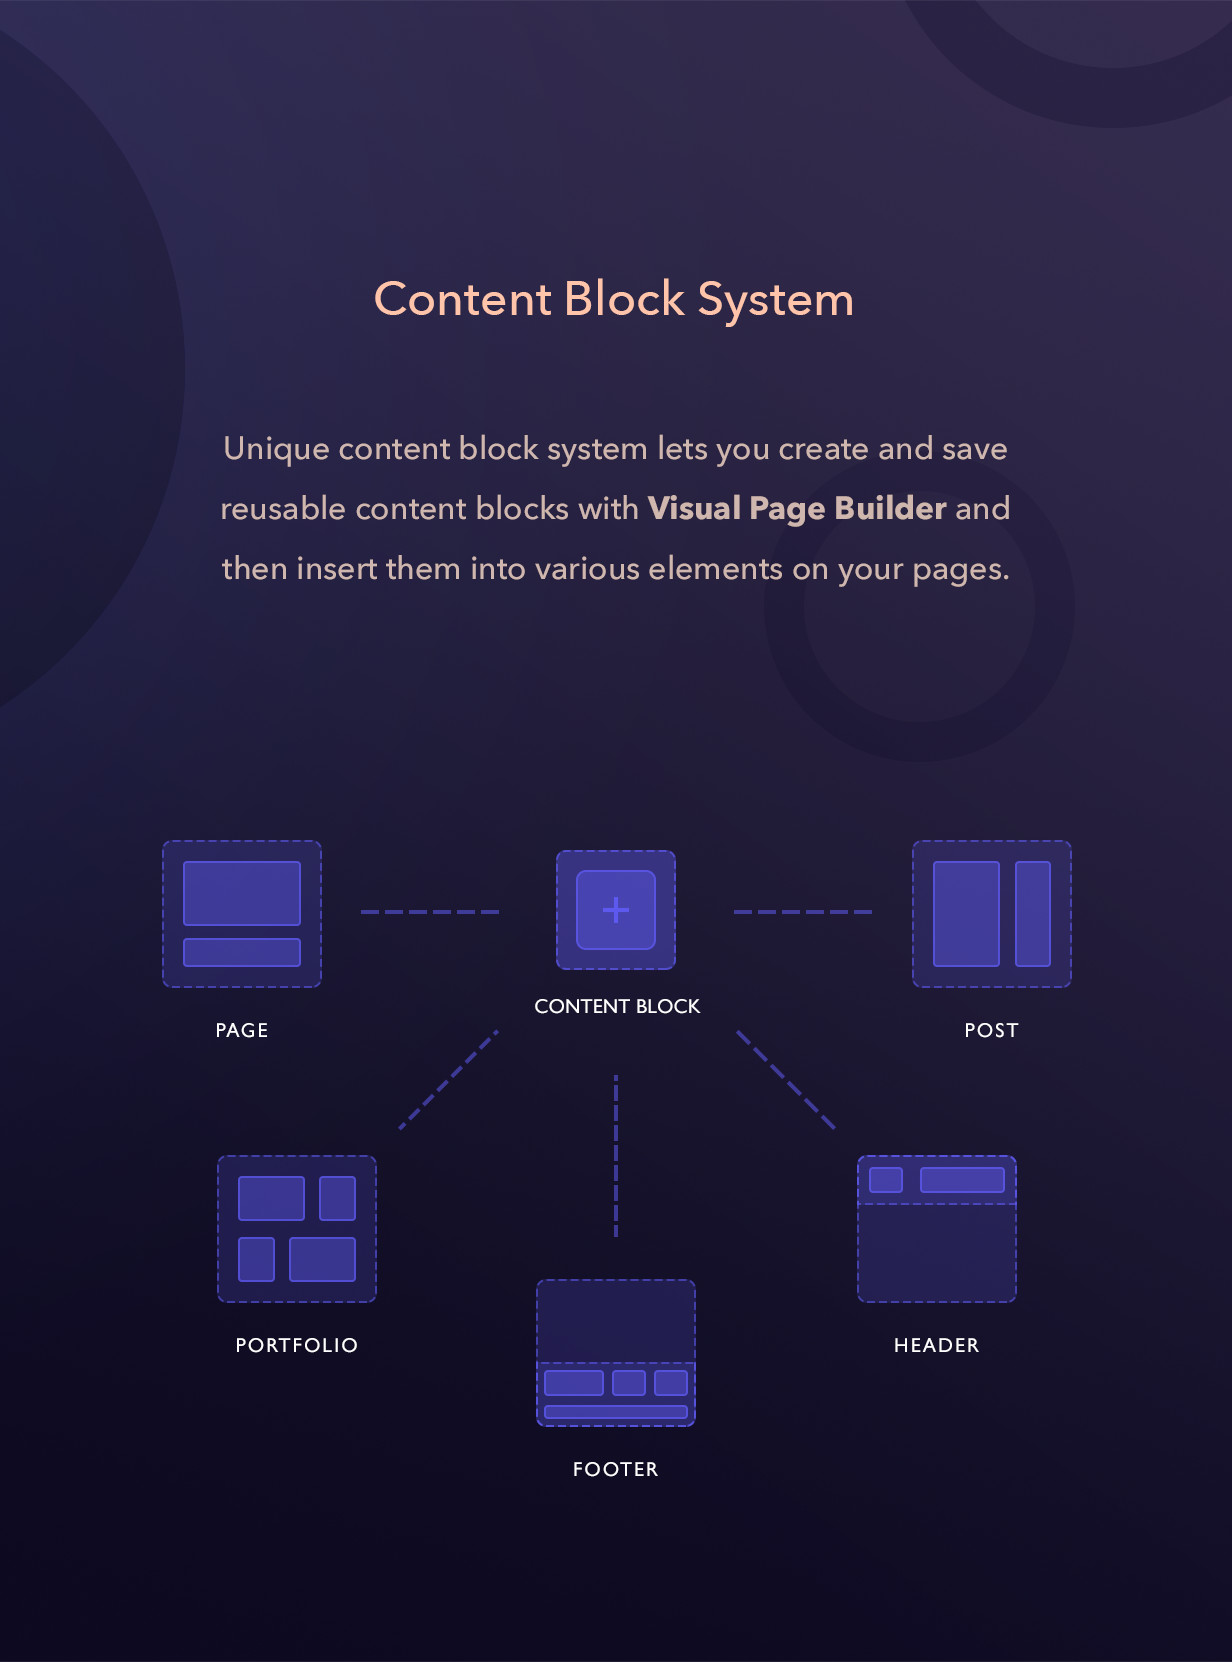 Content block system